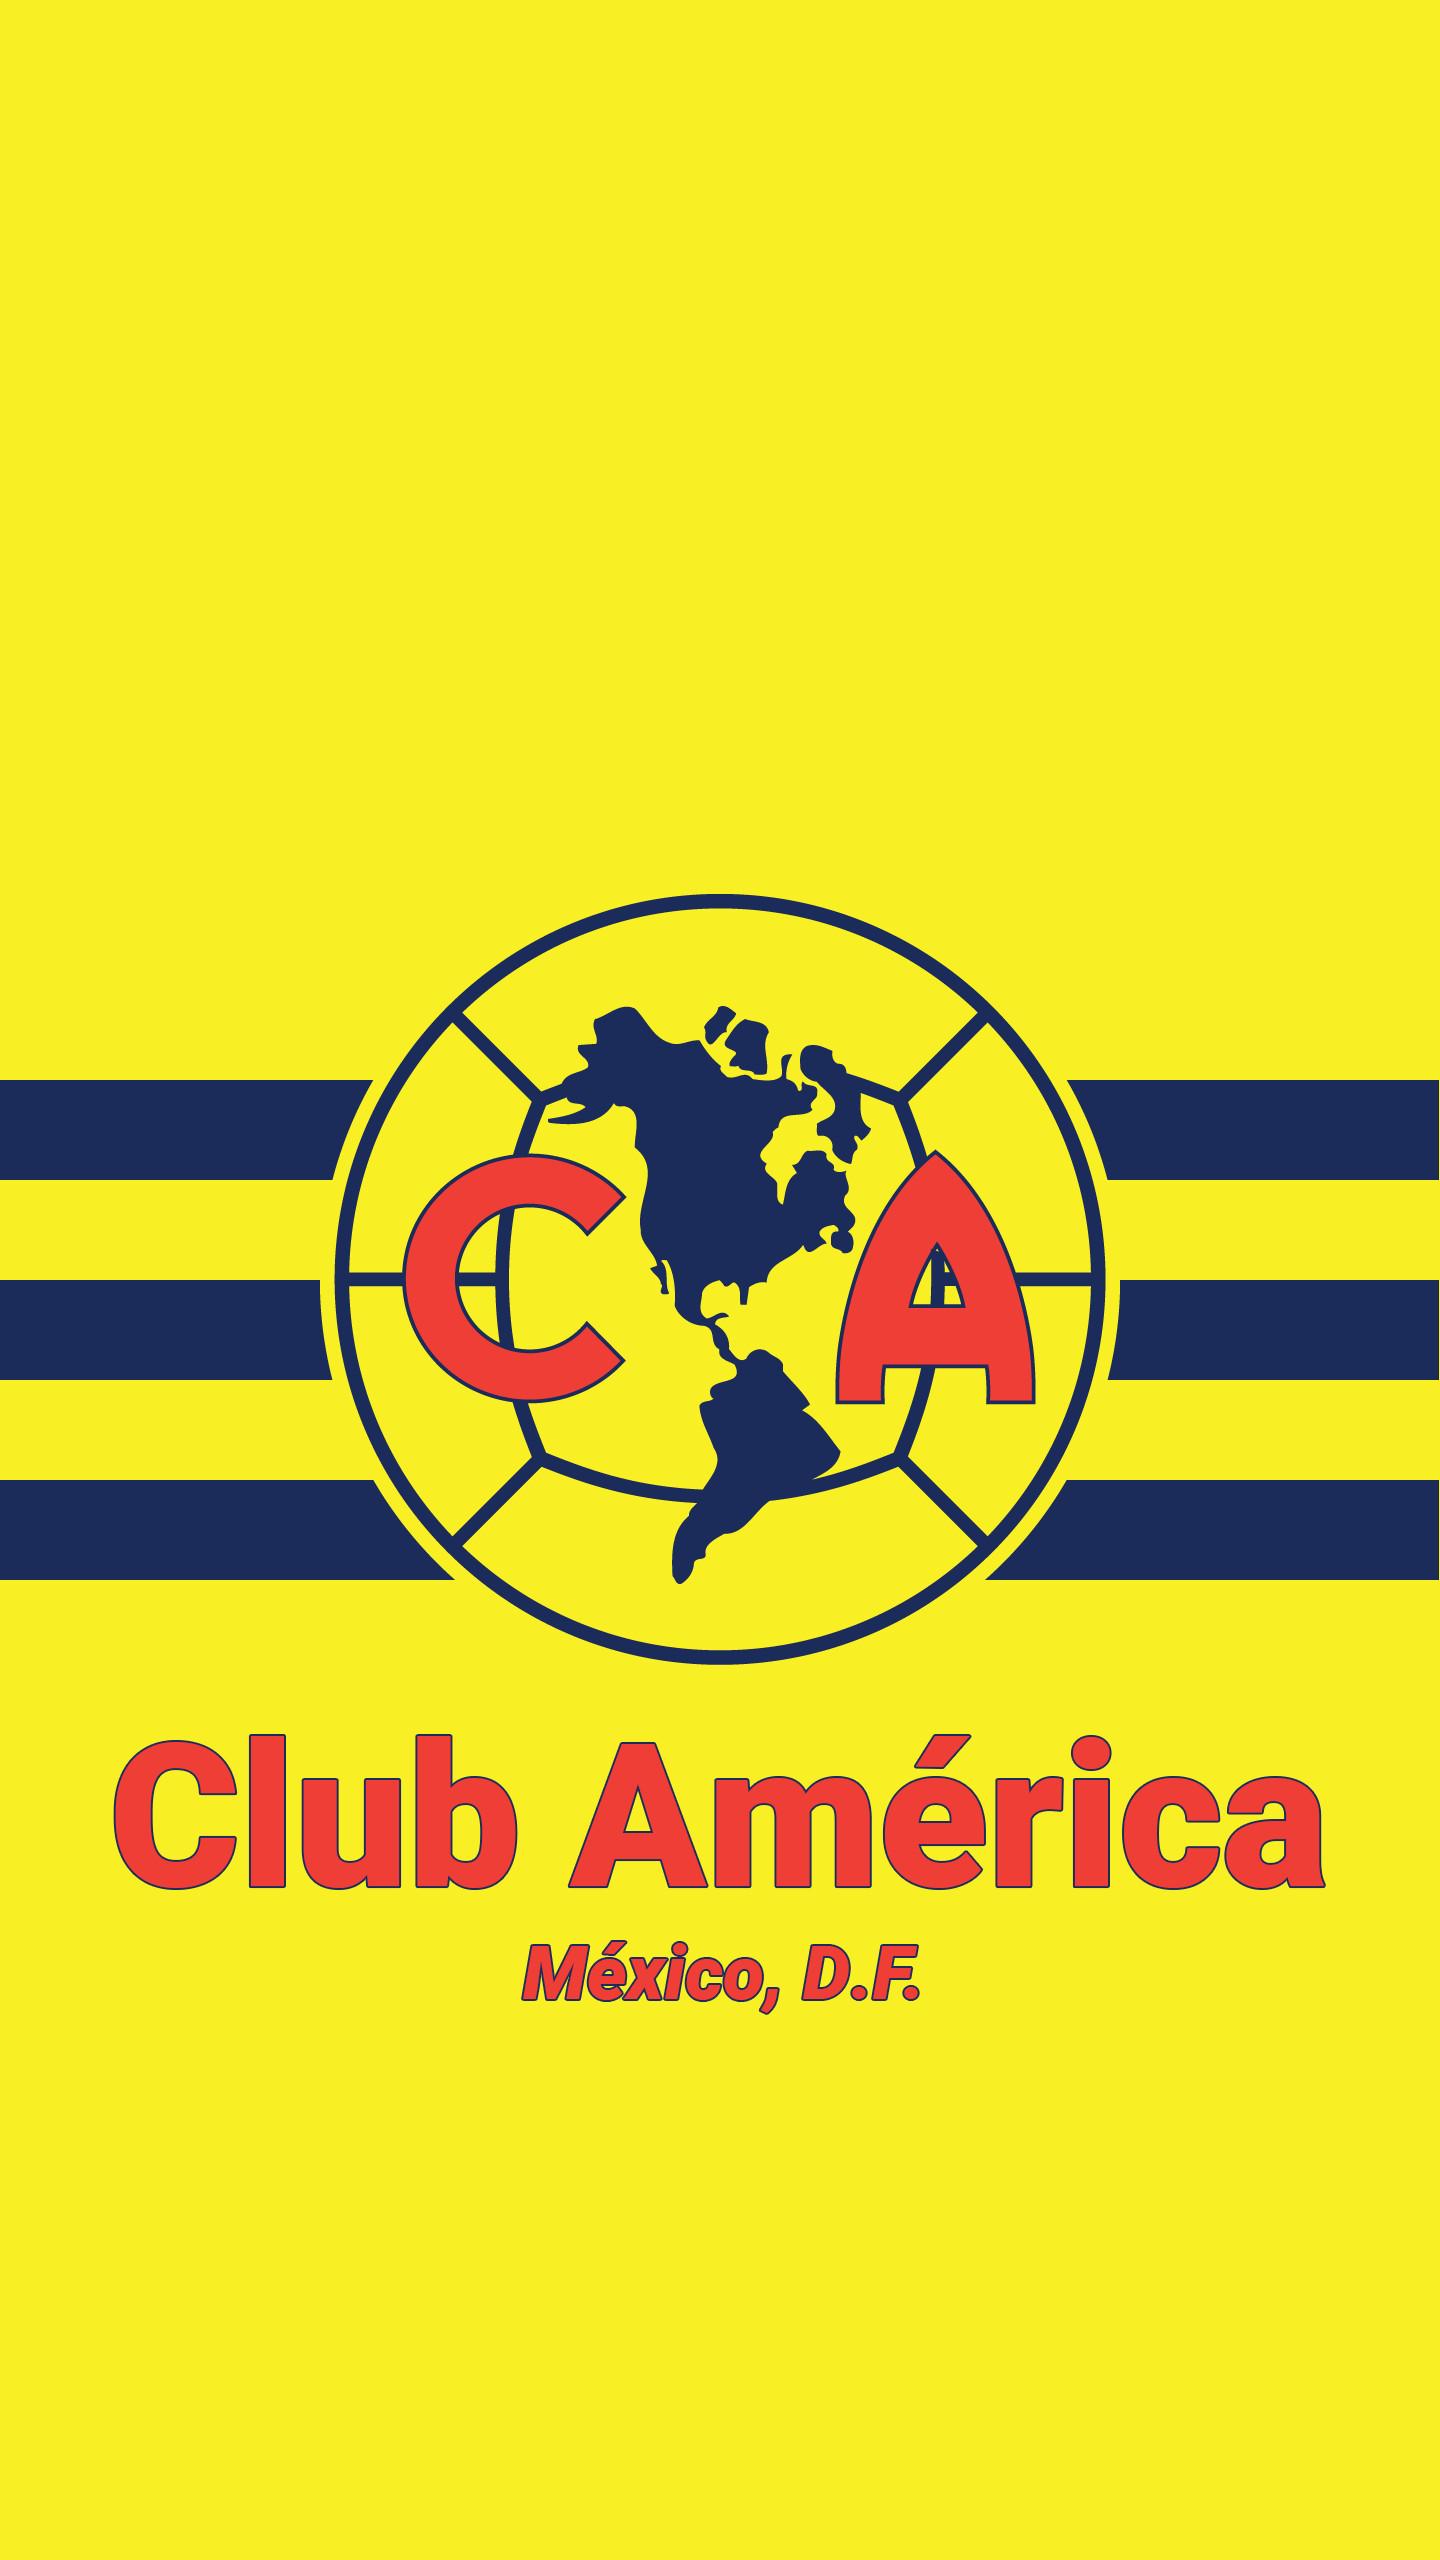 Club America Soccer Wallpapers Top Free Club America Soccer Backgrounds Wallpaperaccess 8446